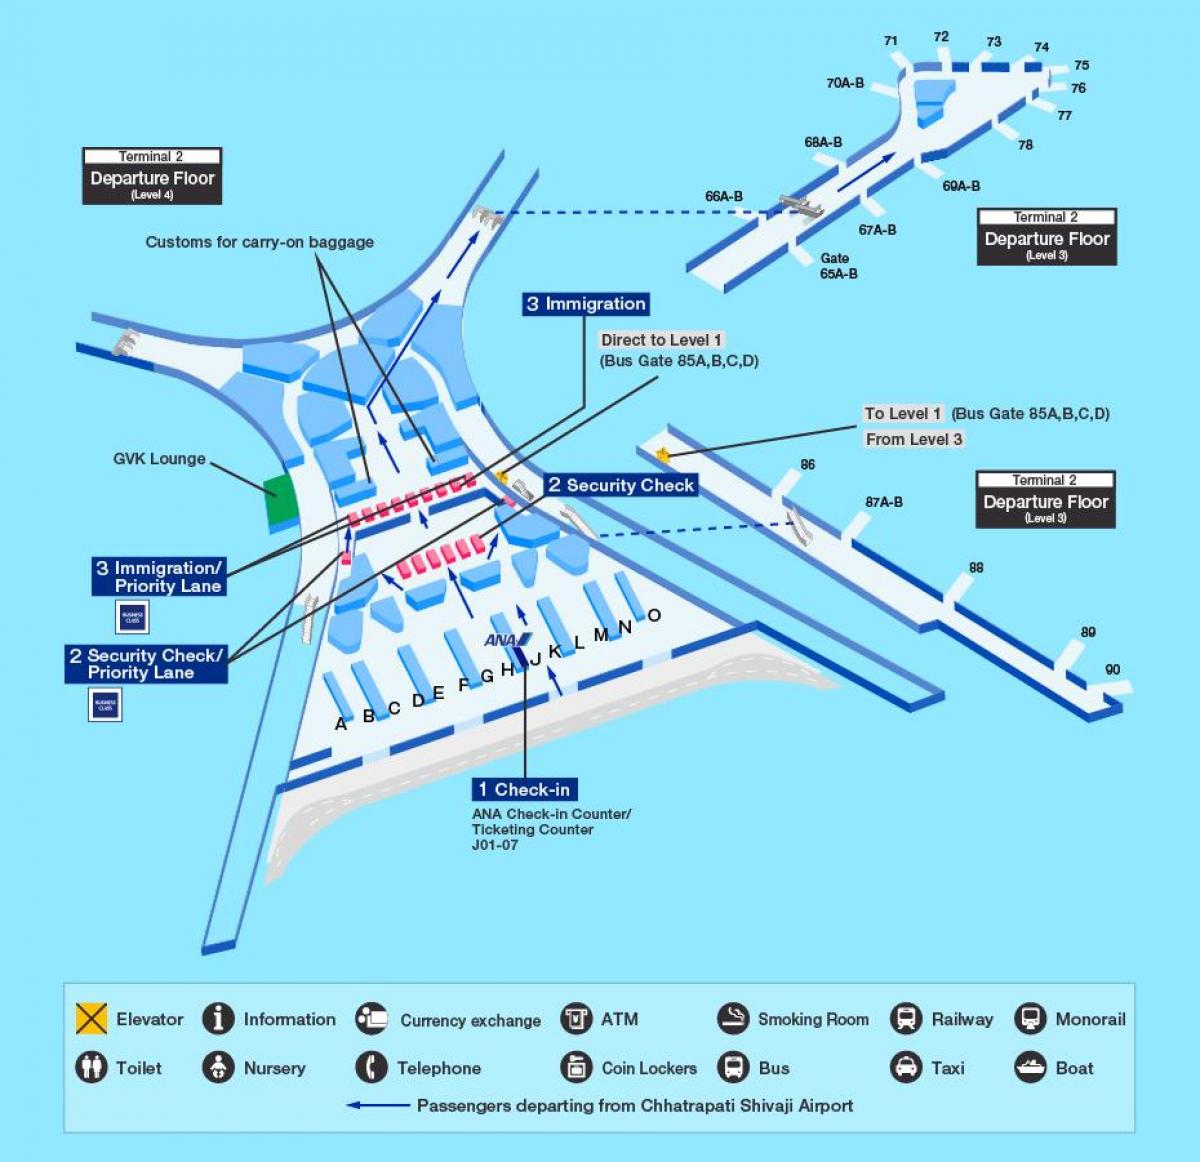 kort over Mumbai lufthavn